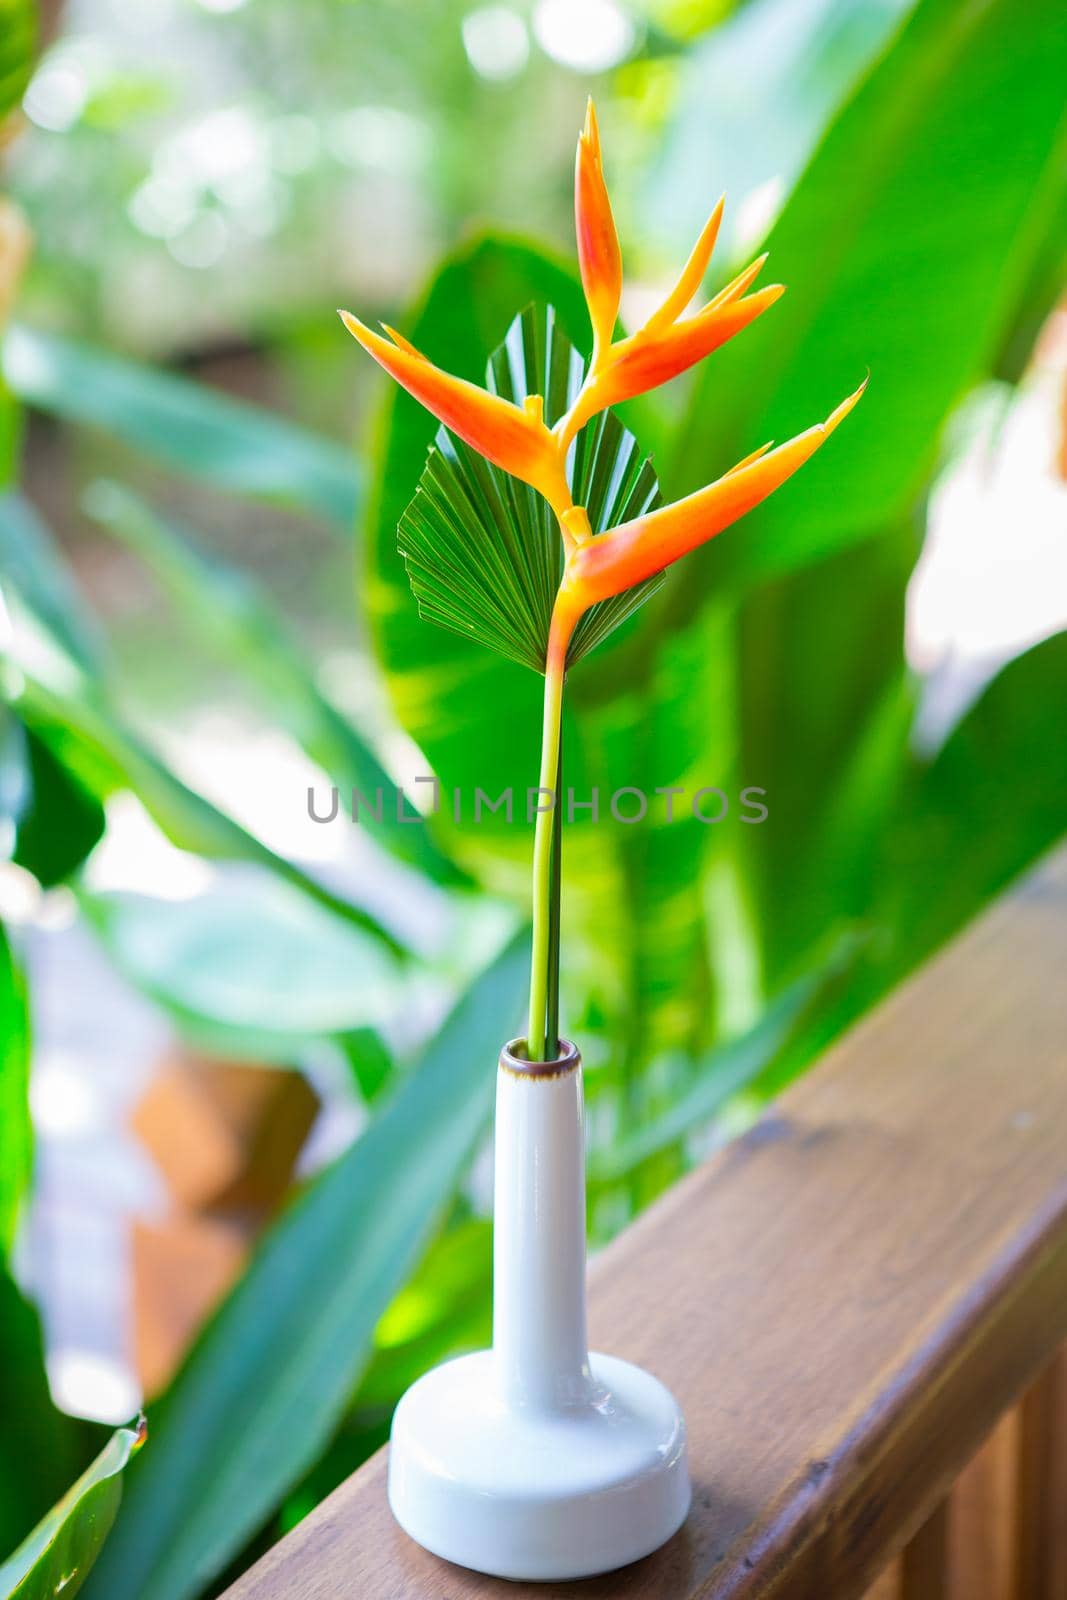 orange bird paradise flower with green leaves